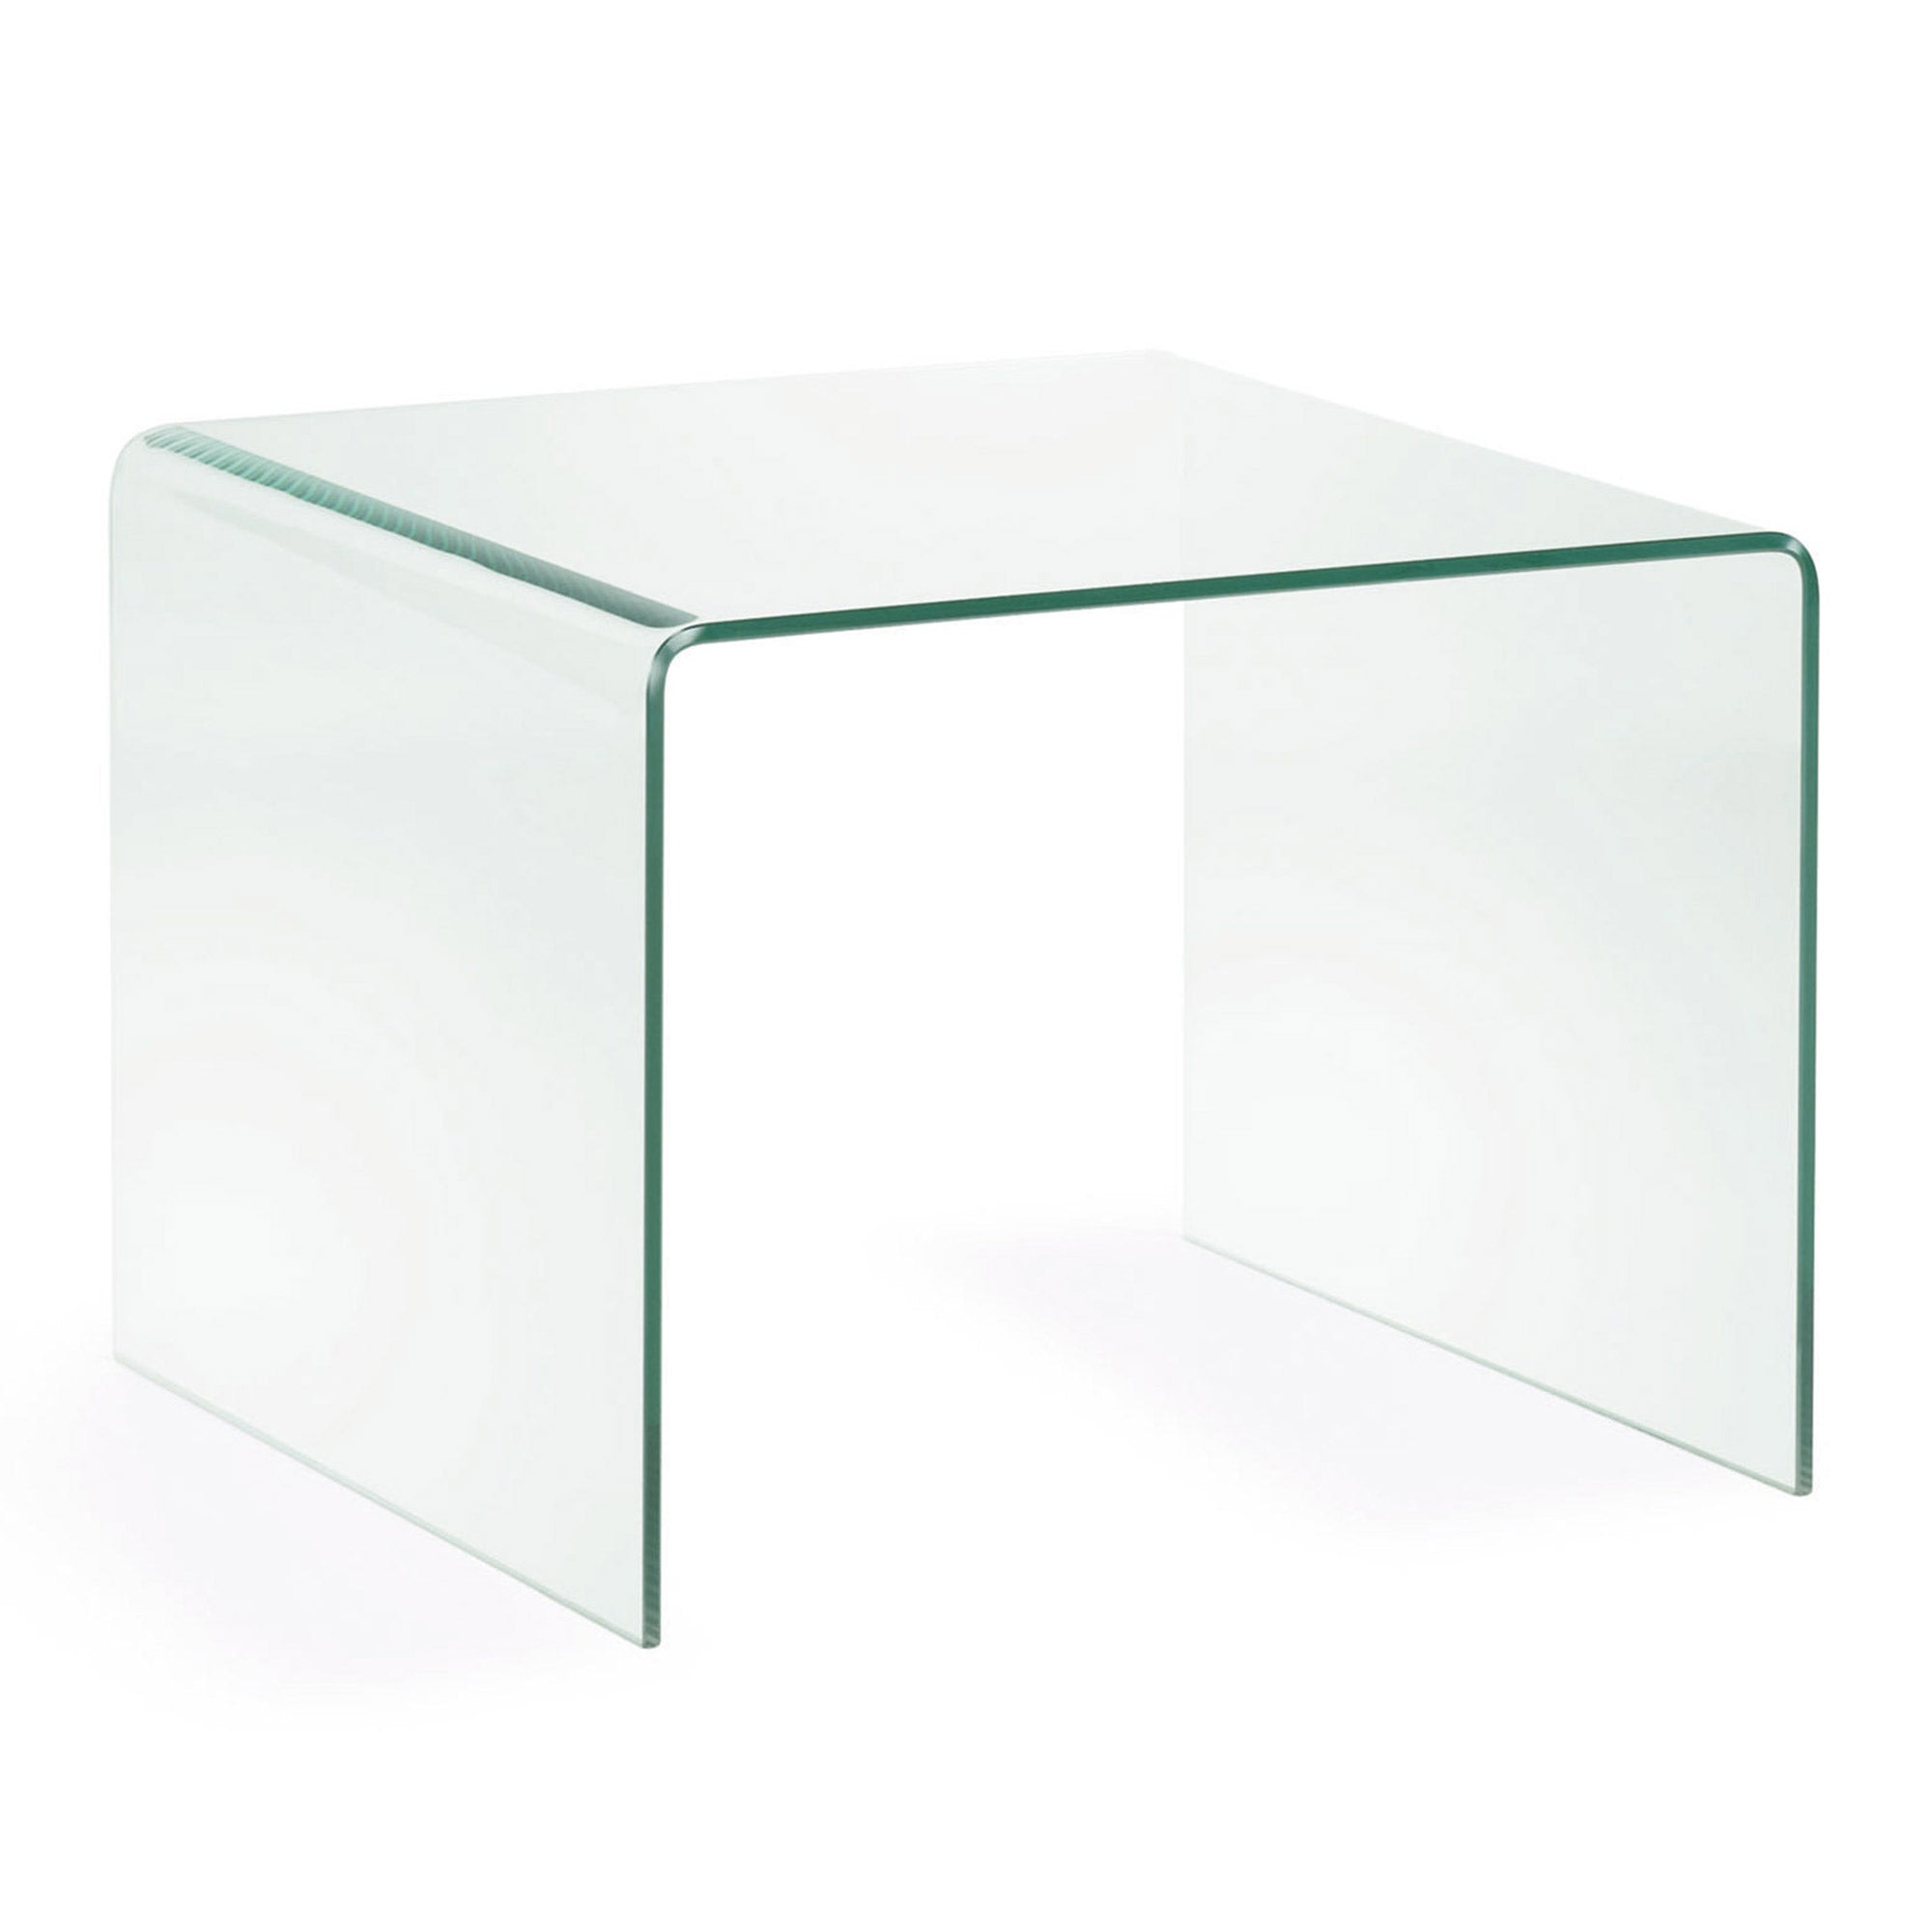 Burano glass side table 60 x 60 cm